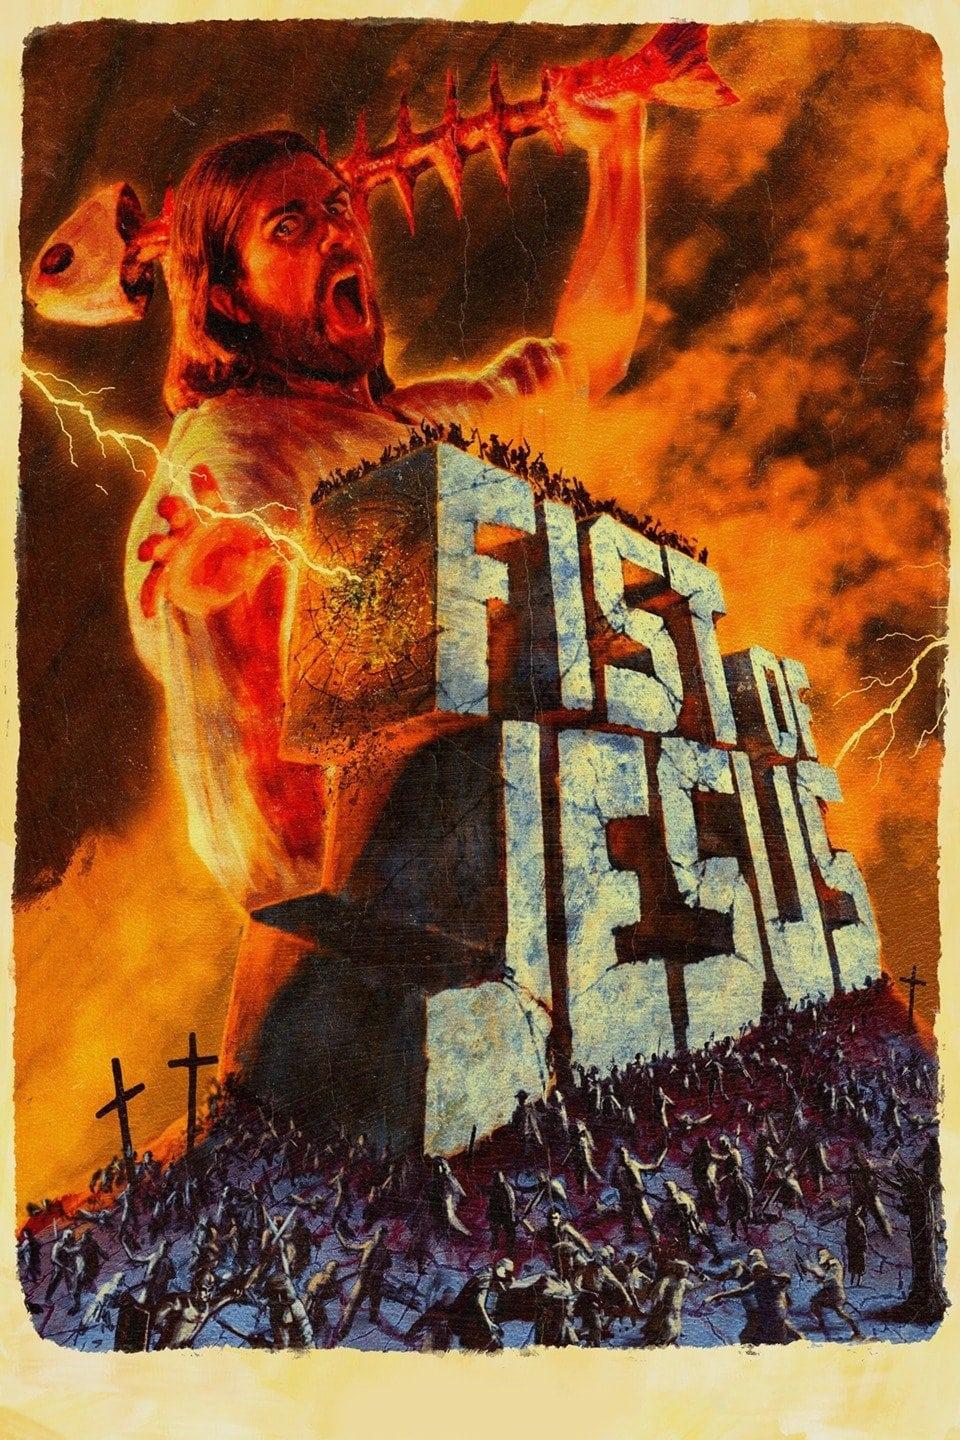 Fist of Jesus poster